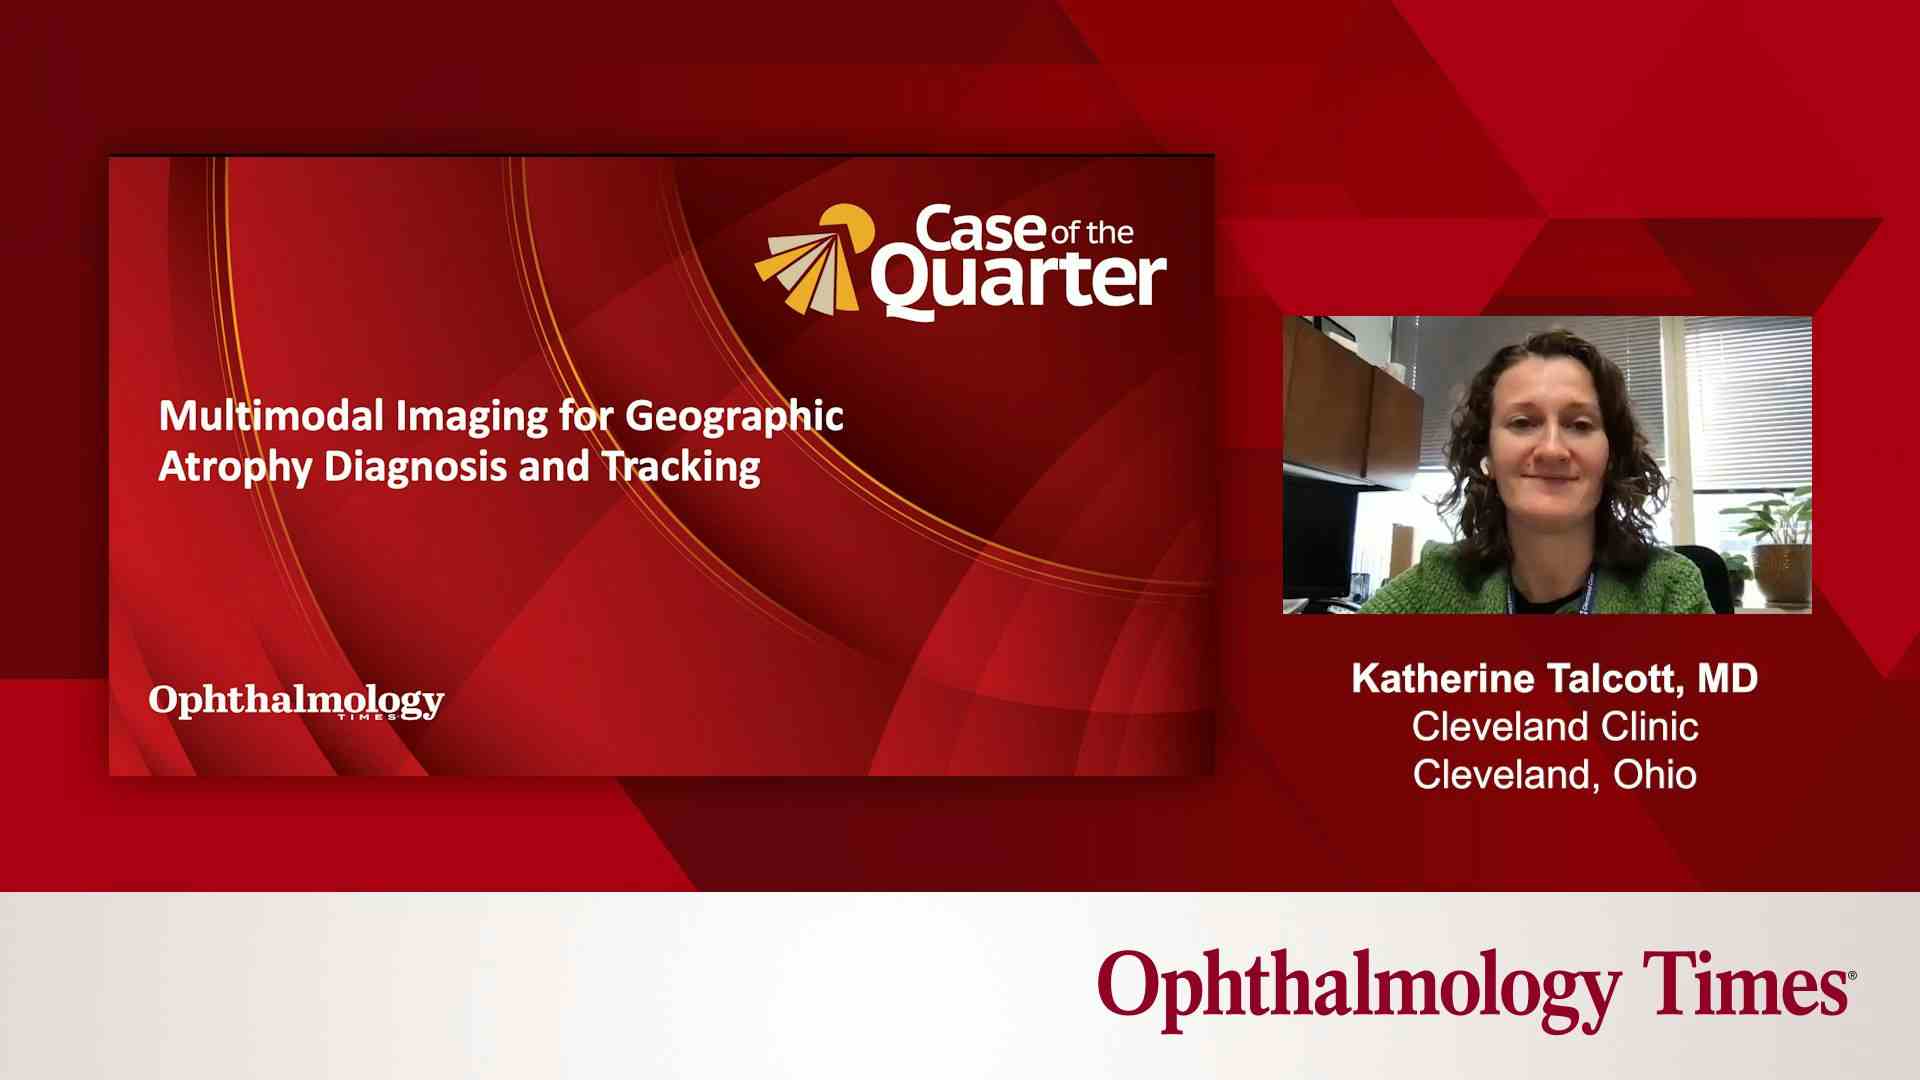 Katherine Talcott, MD, presenting slides